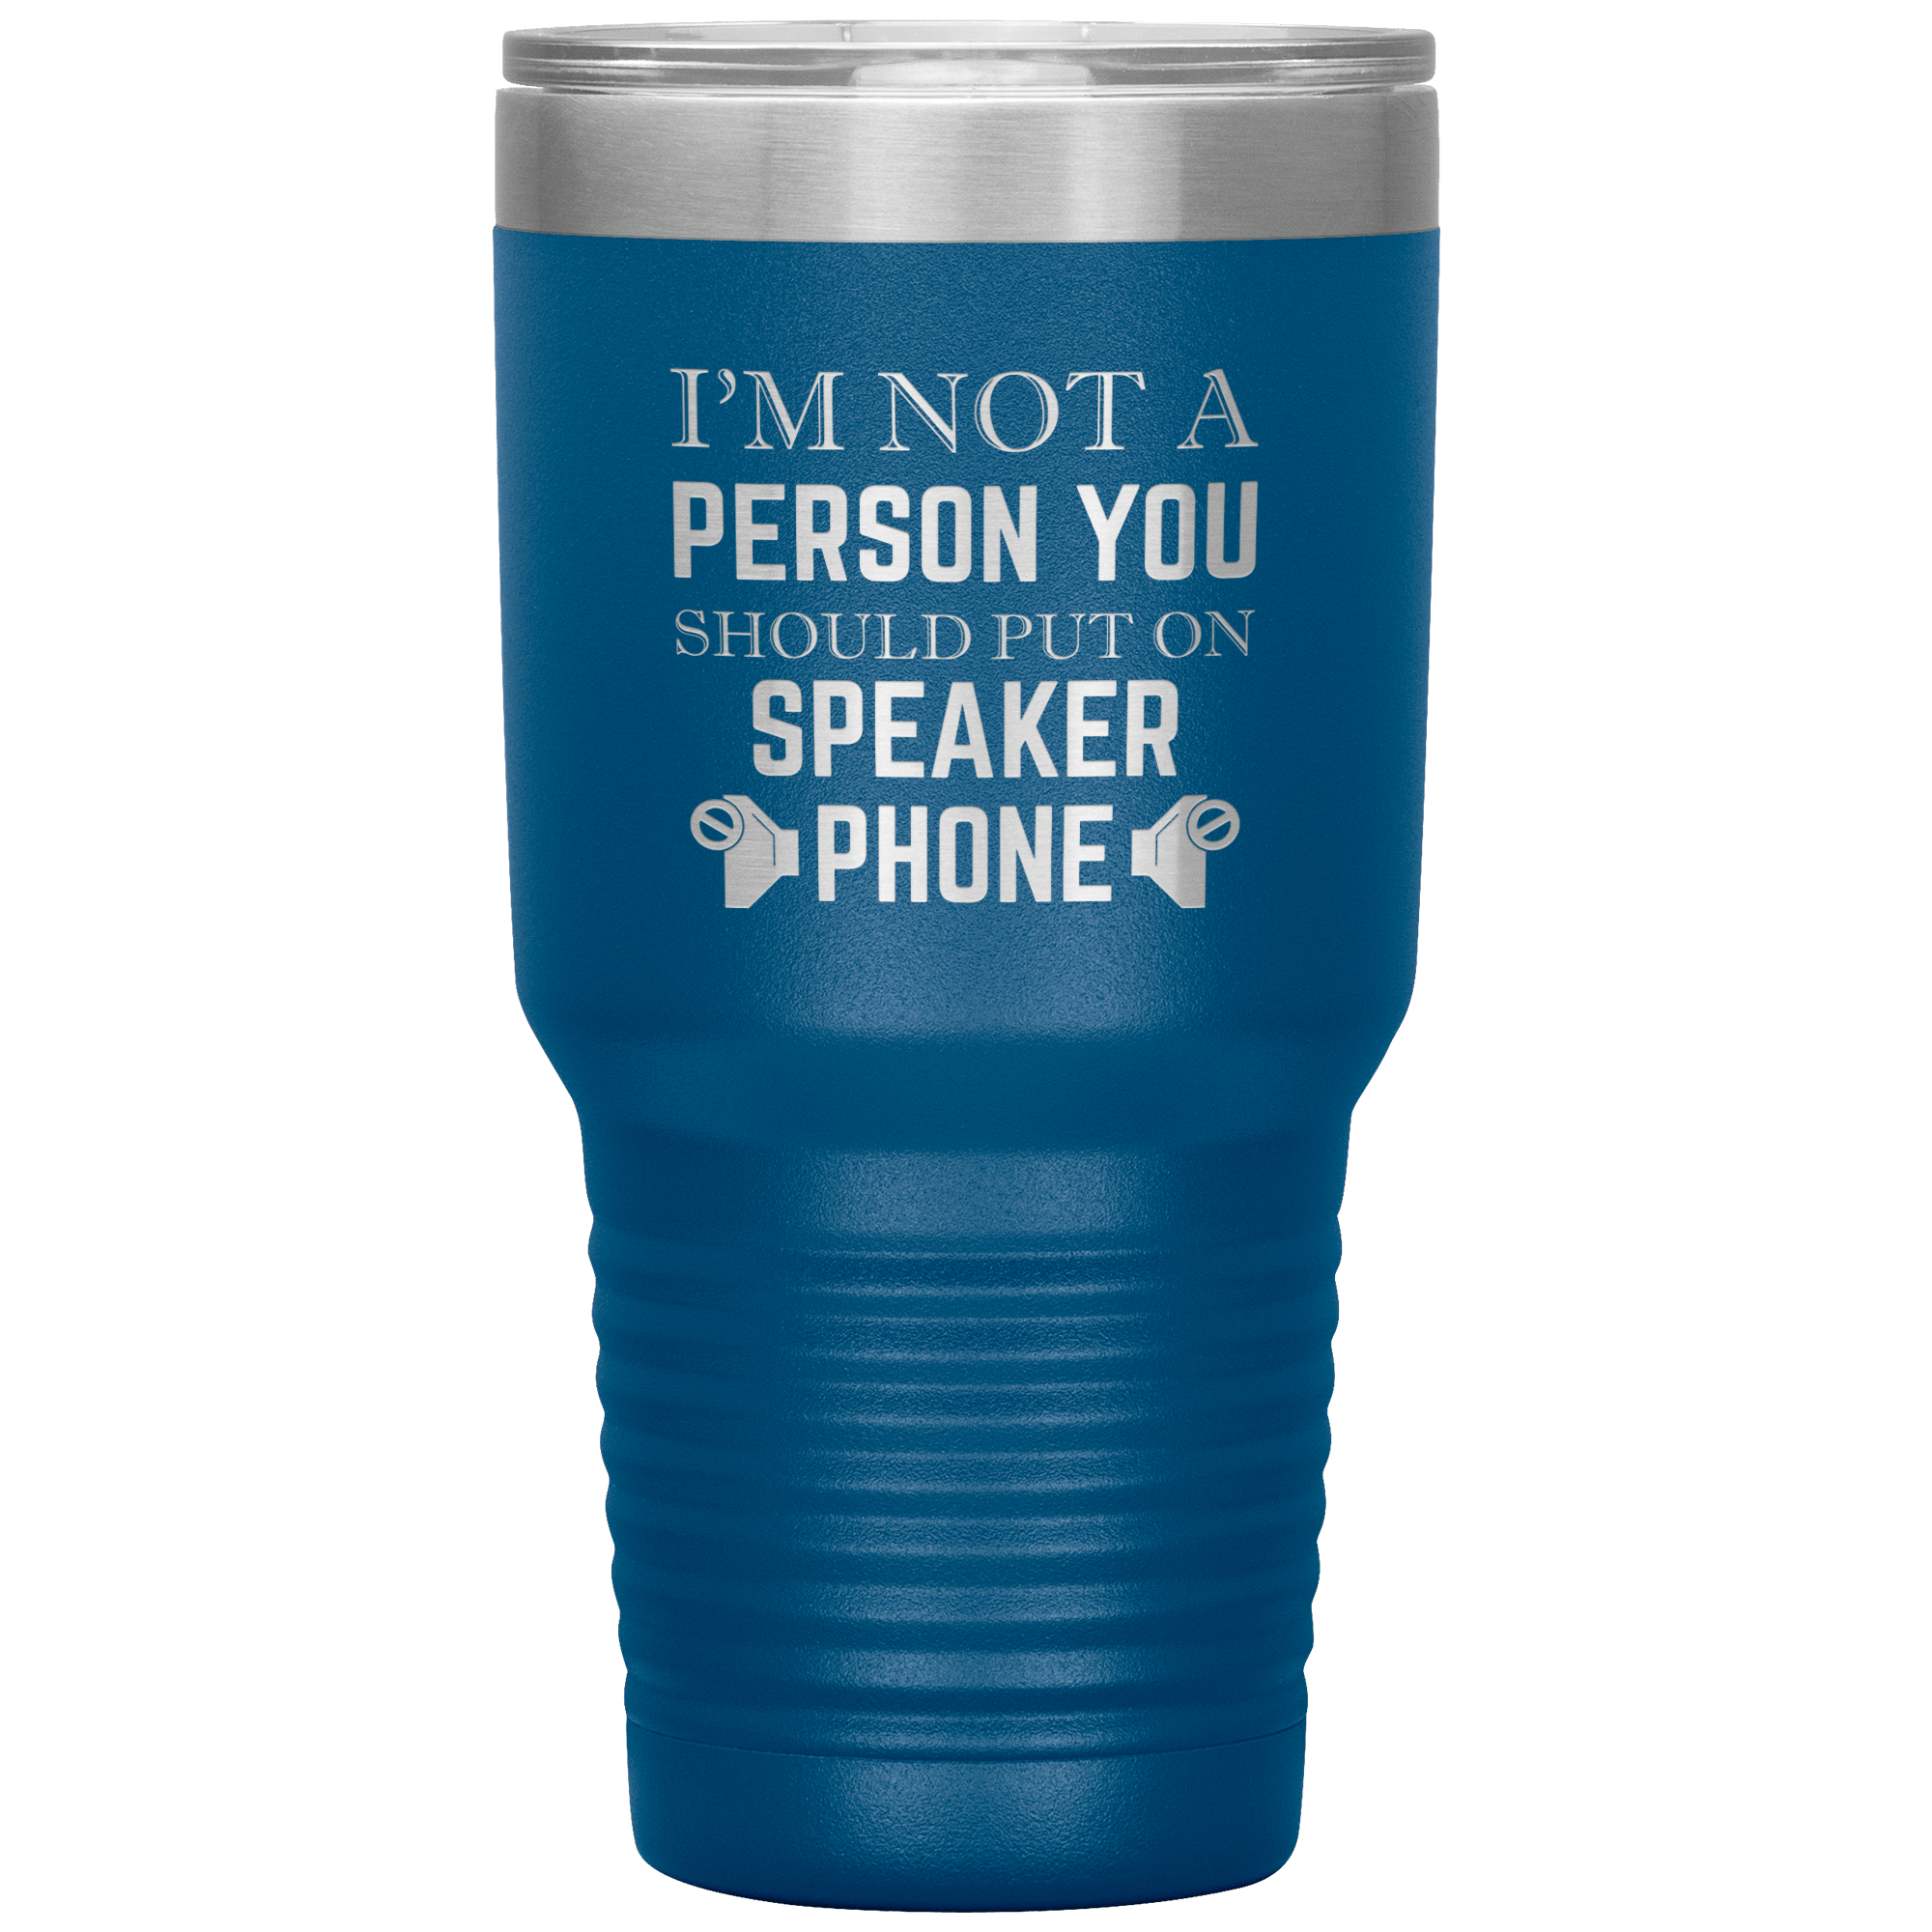 I'M NOT A SPEAKER PHONE PERSON - TUMBLER